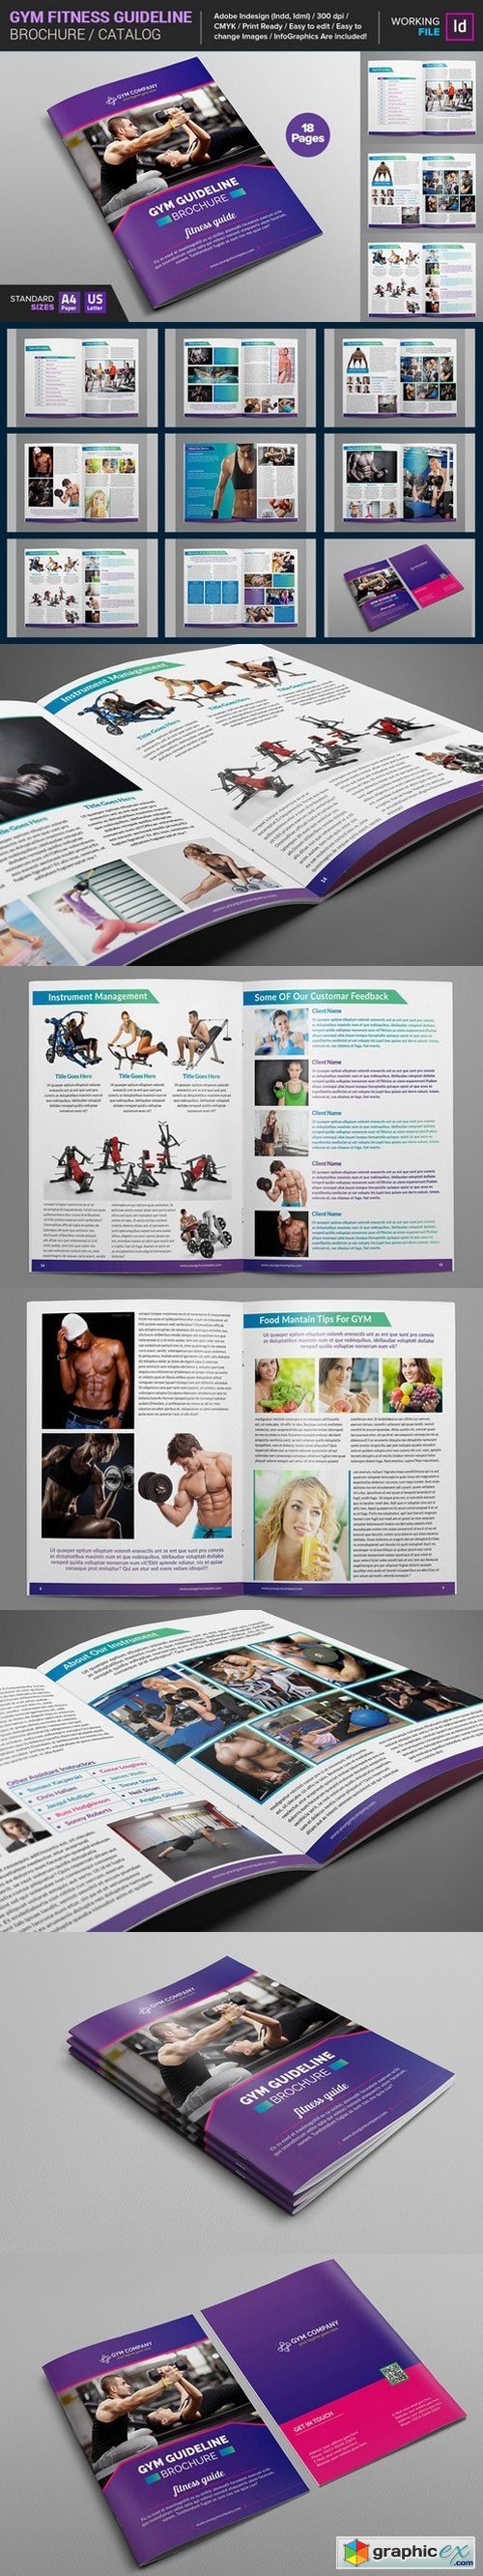 GYM Fitness Guideline Brochure